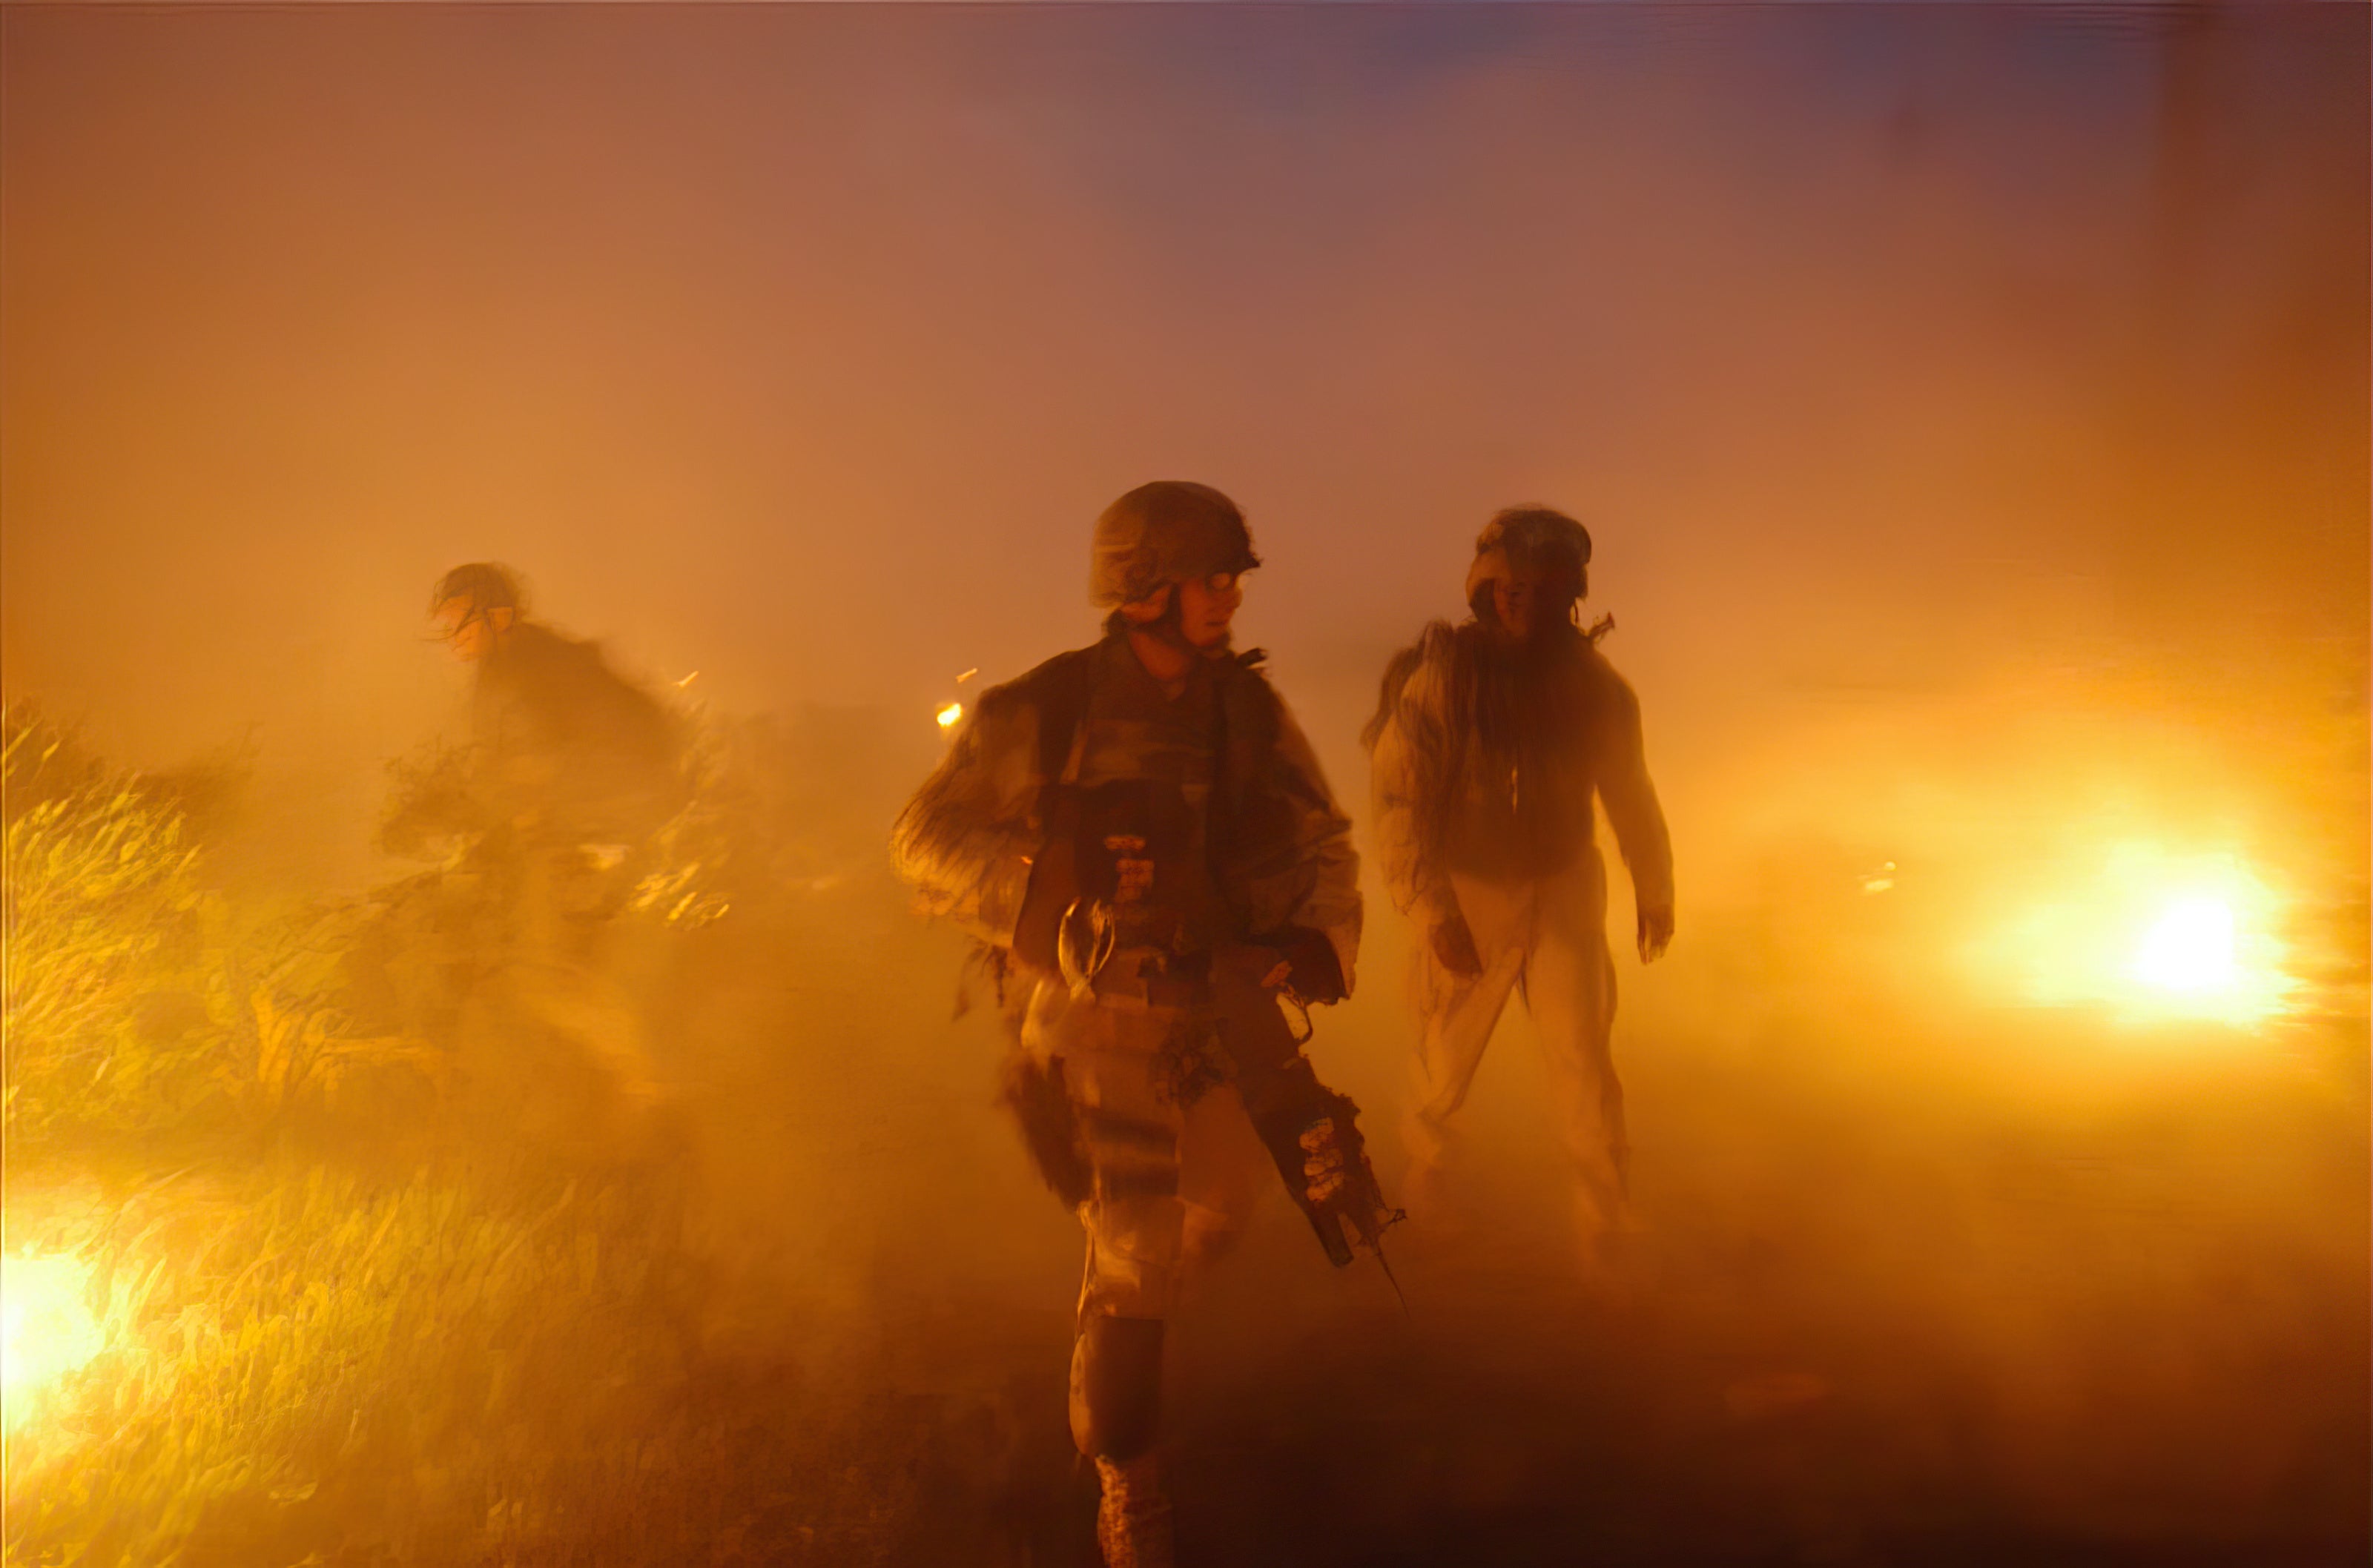 Battlefield Fallujah Audio Trailer - Image from the battle